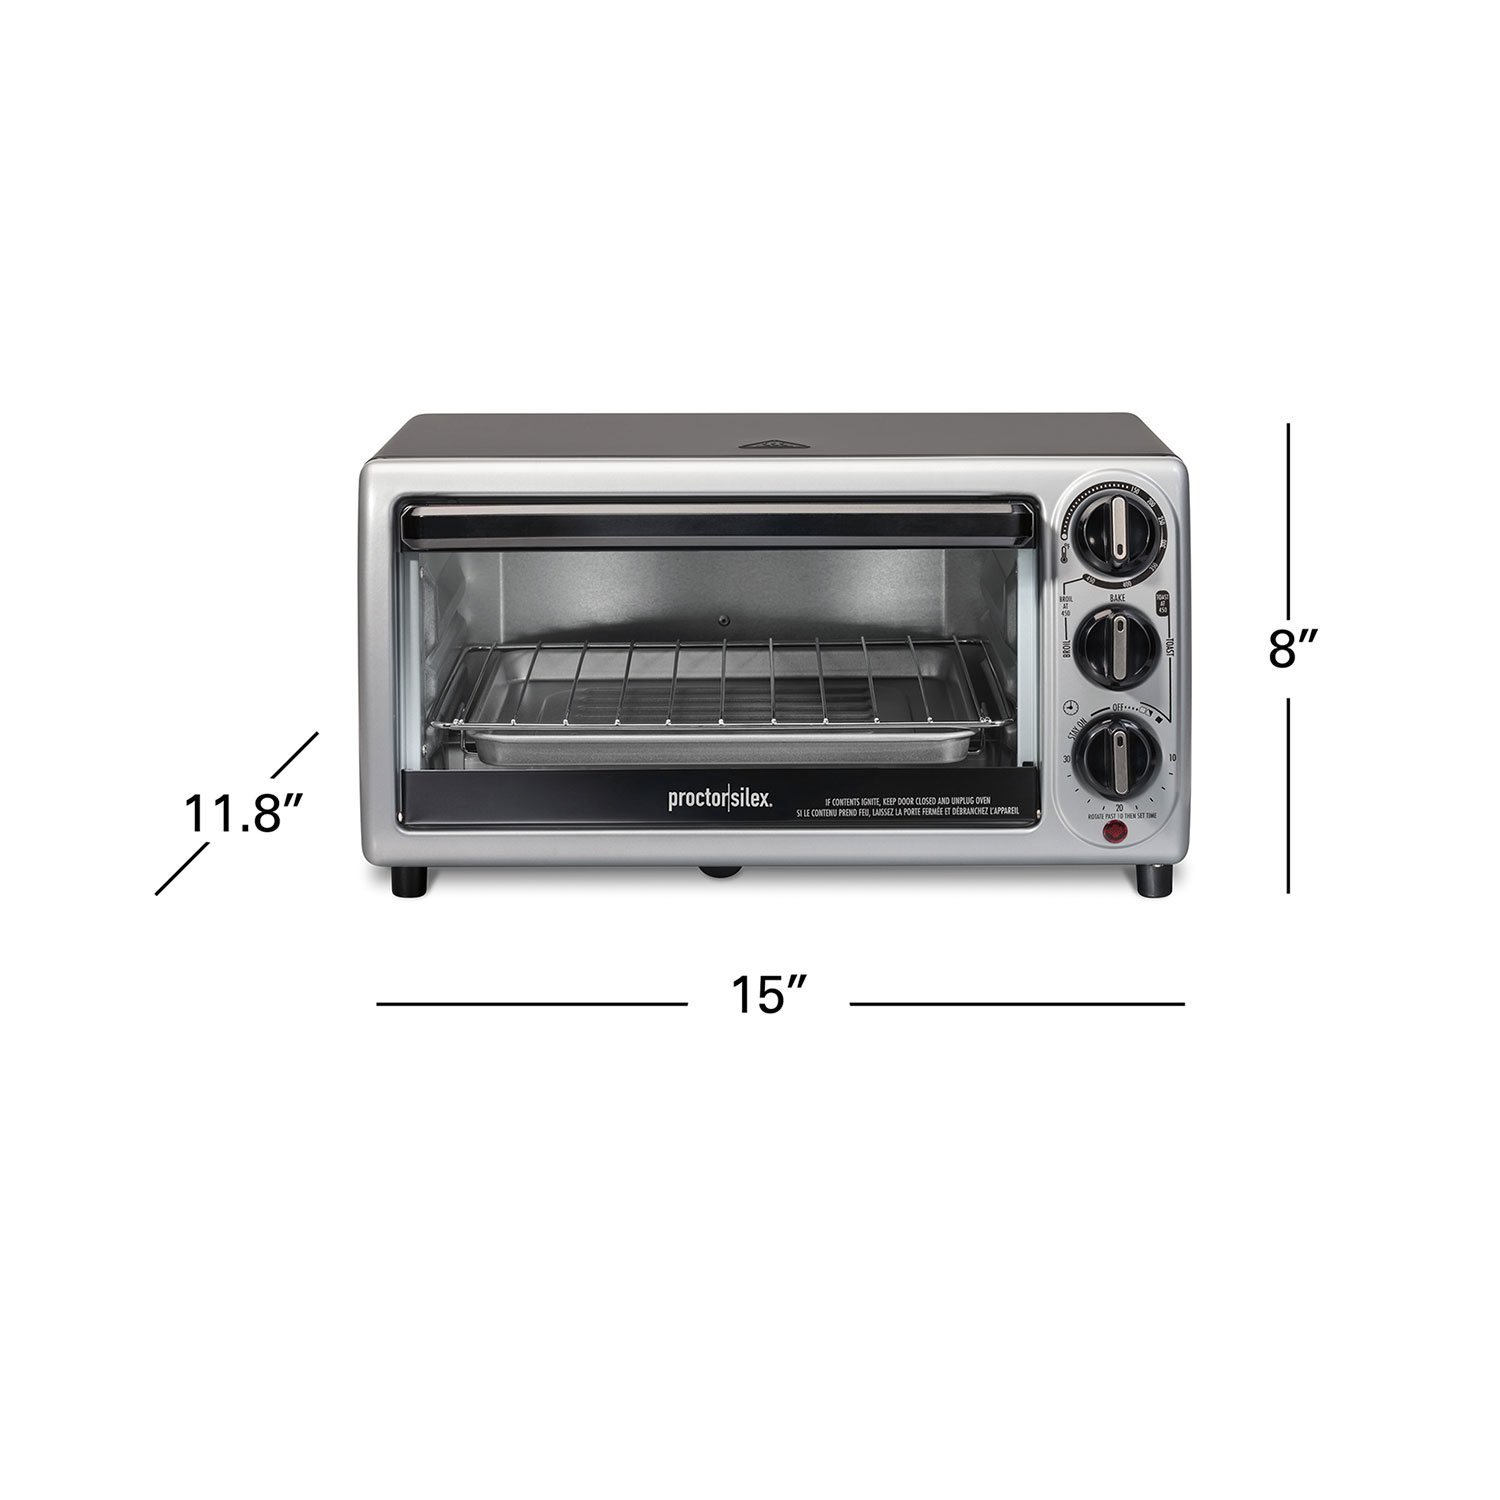 Proctor Silex 4 Slice Modern Toaster Oven Toast Pizza Bake Broil